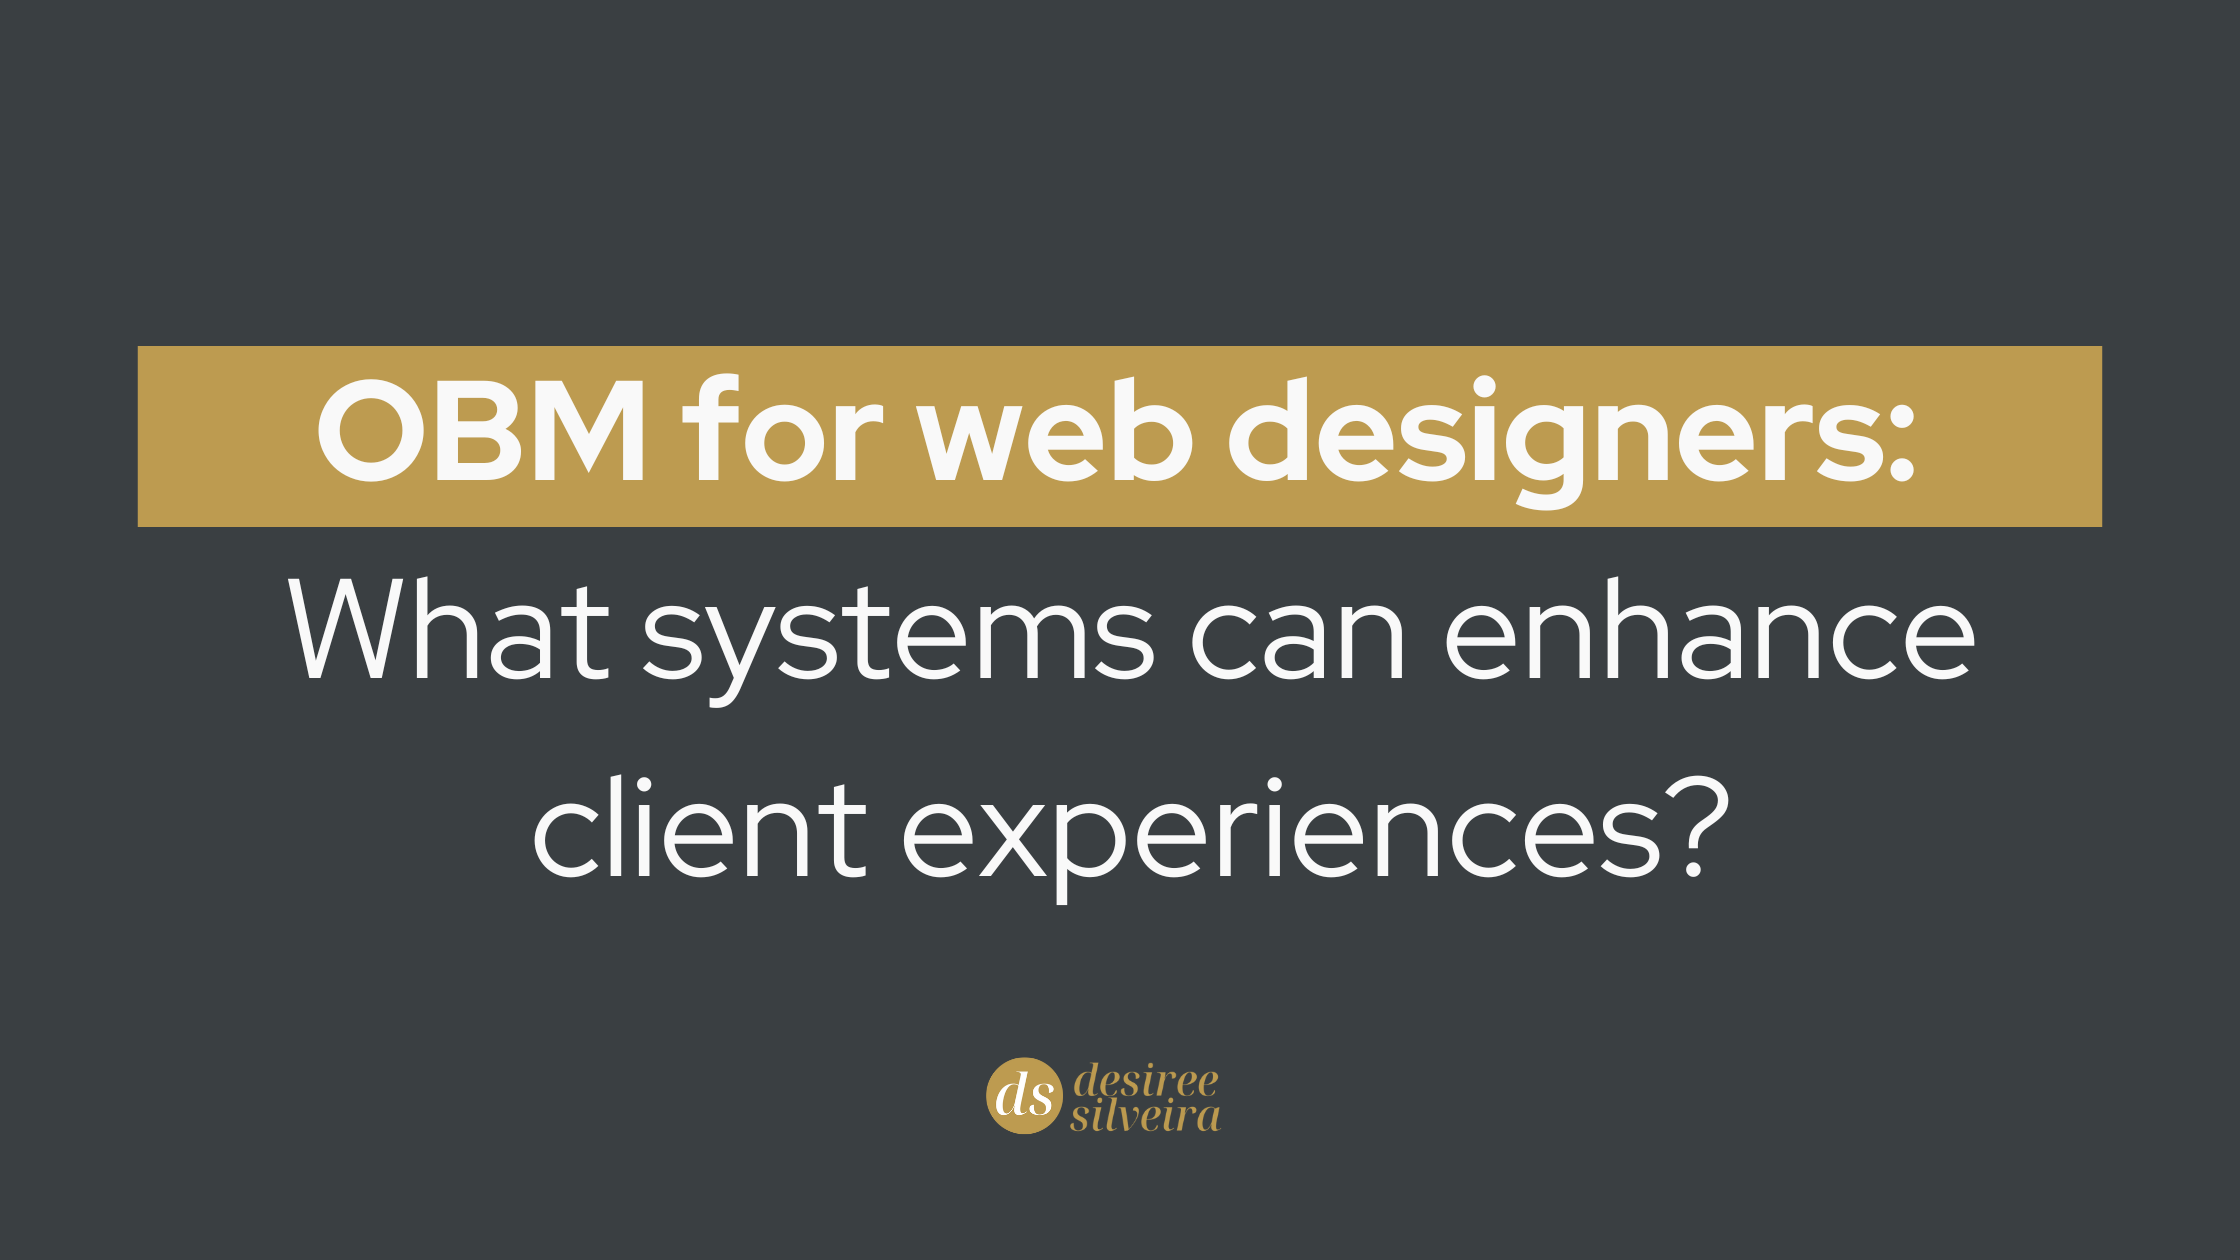 OBM for web designers